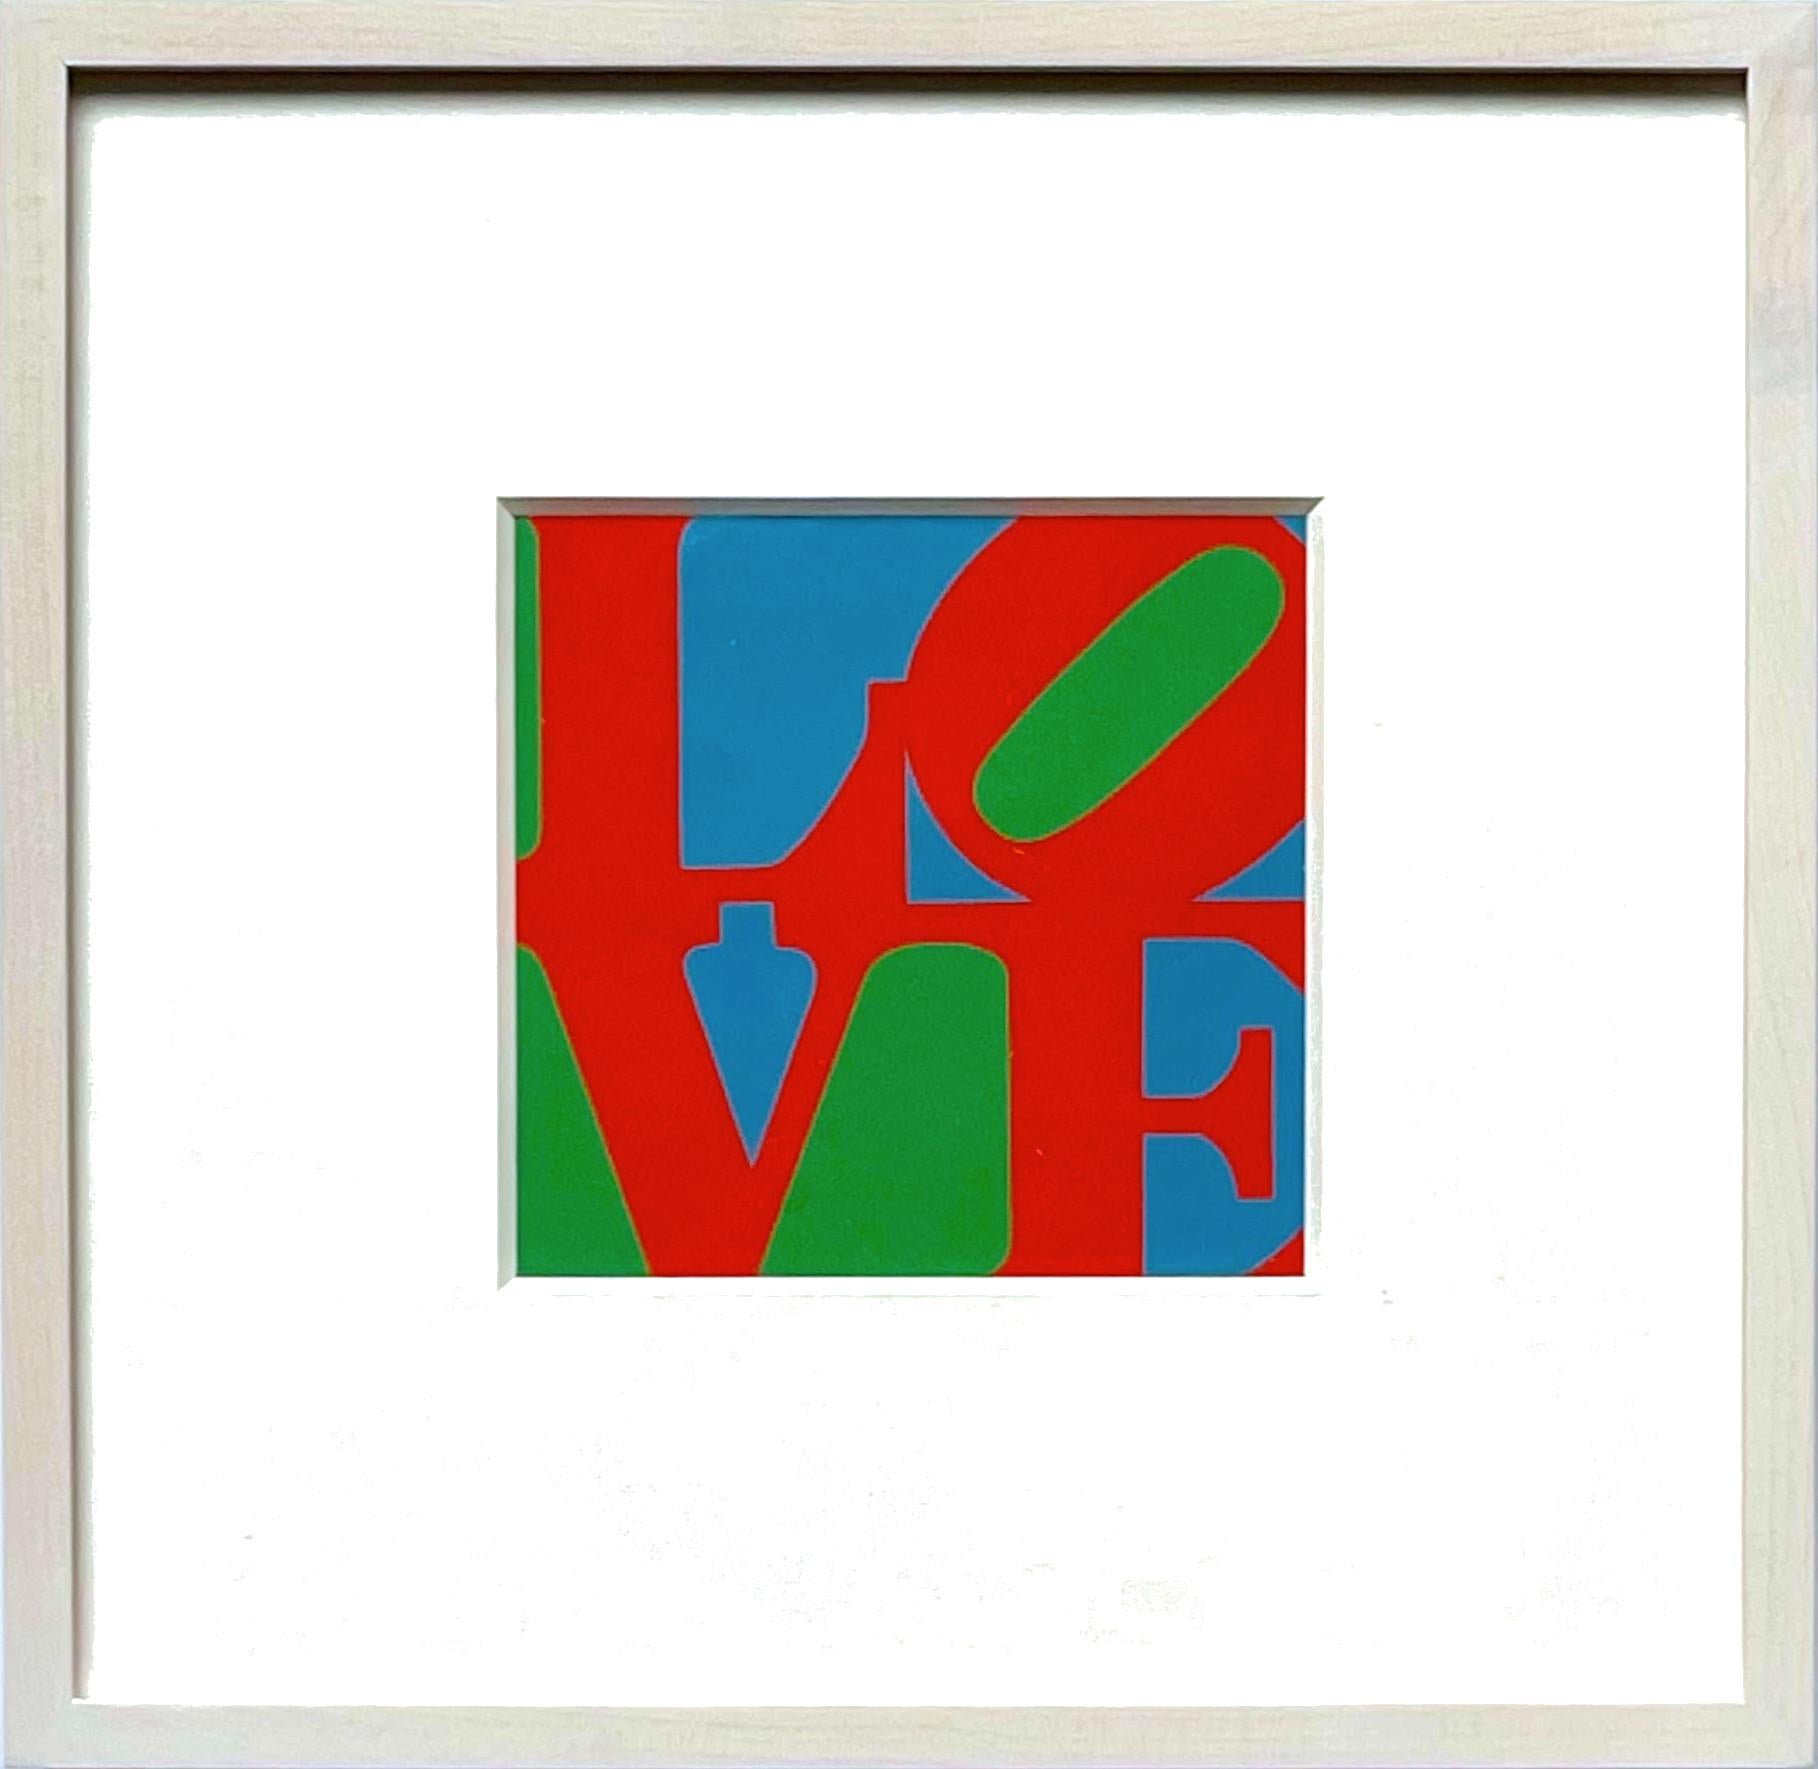 Original Museum of Modern Art LOVE card - Print by Robert Indiana